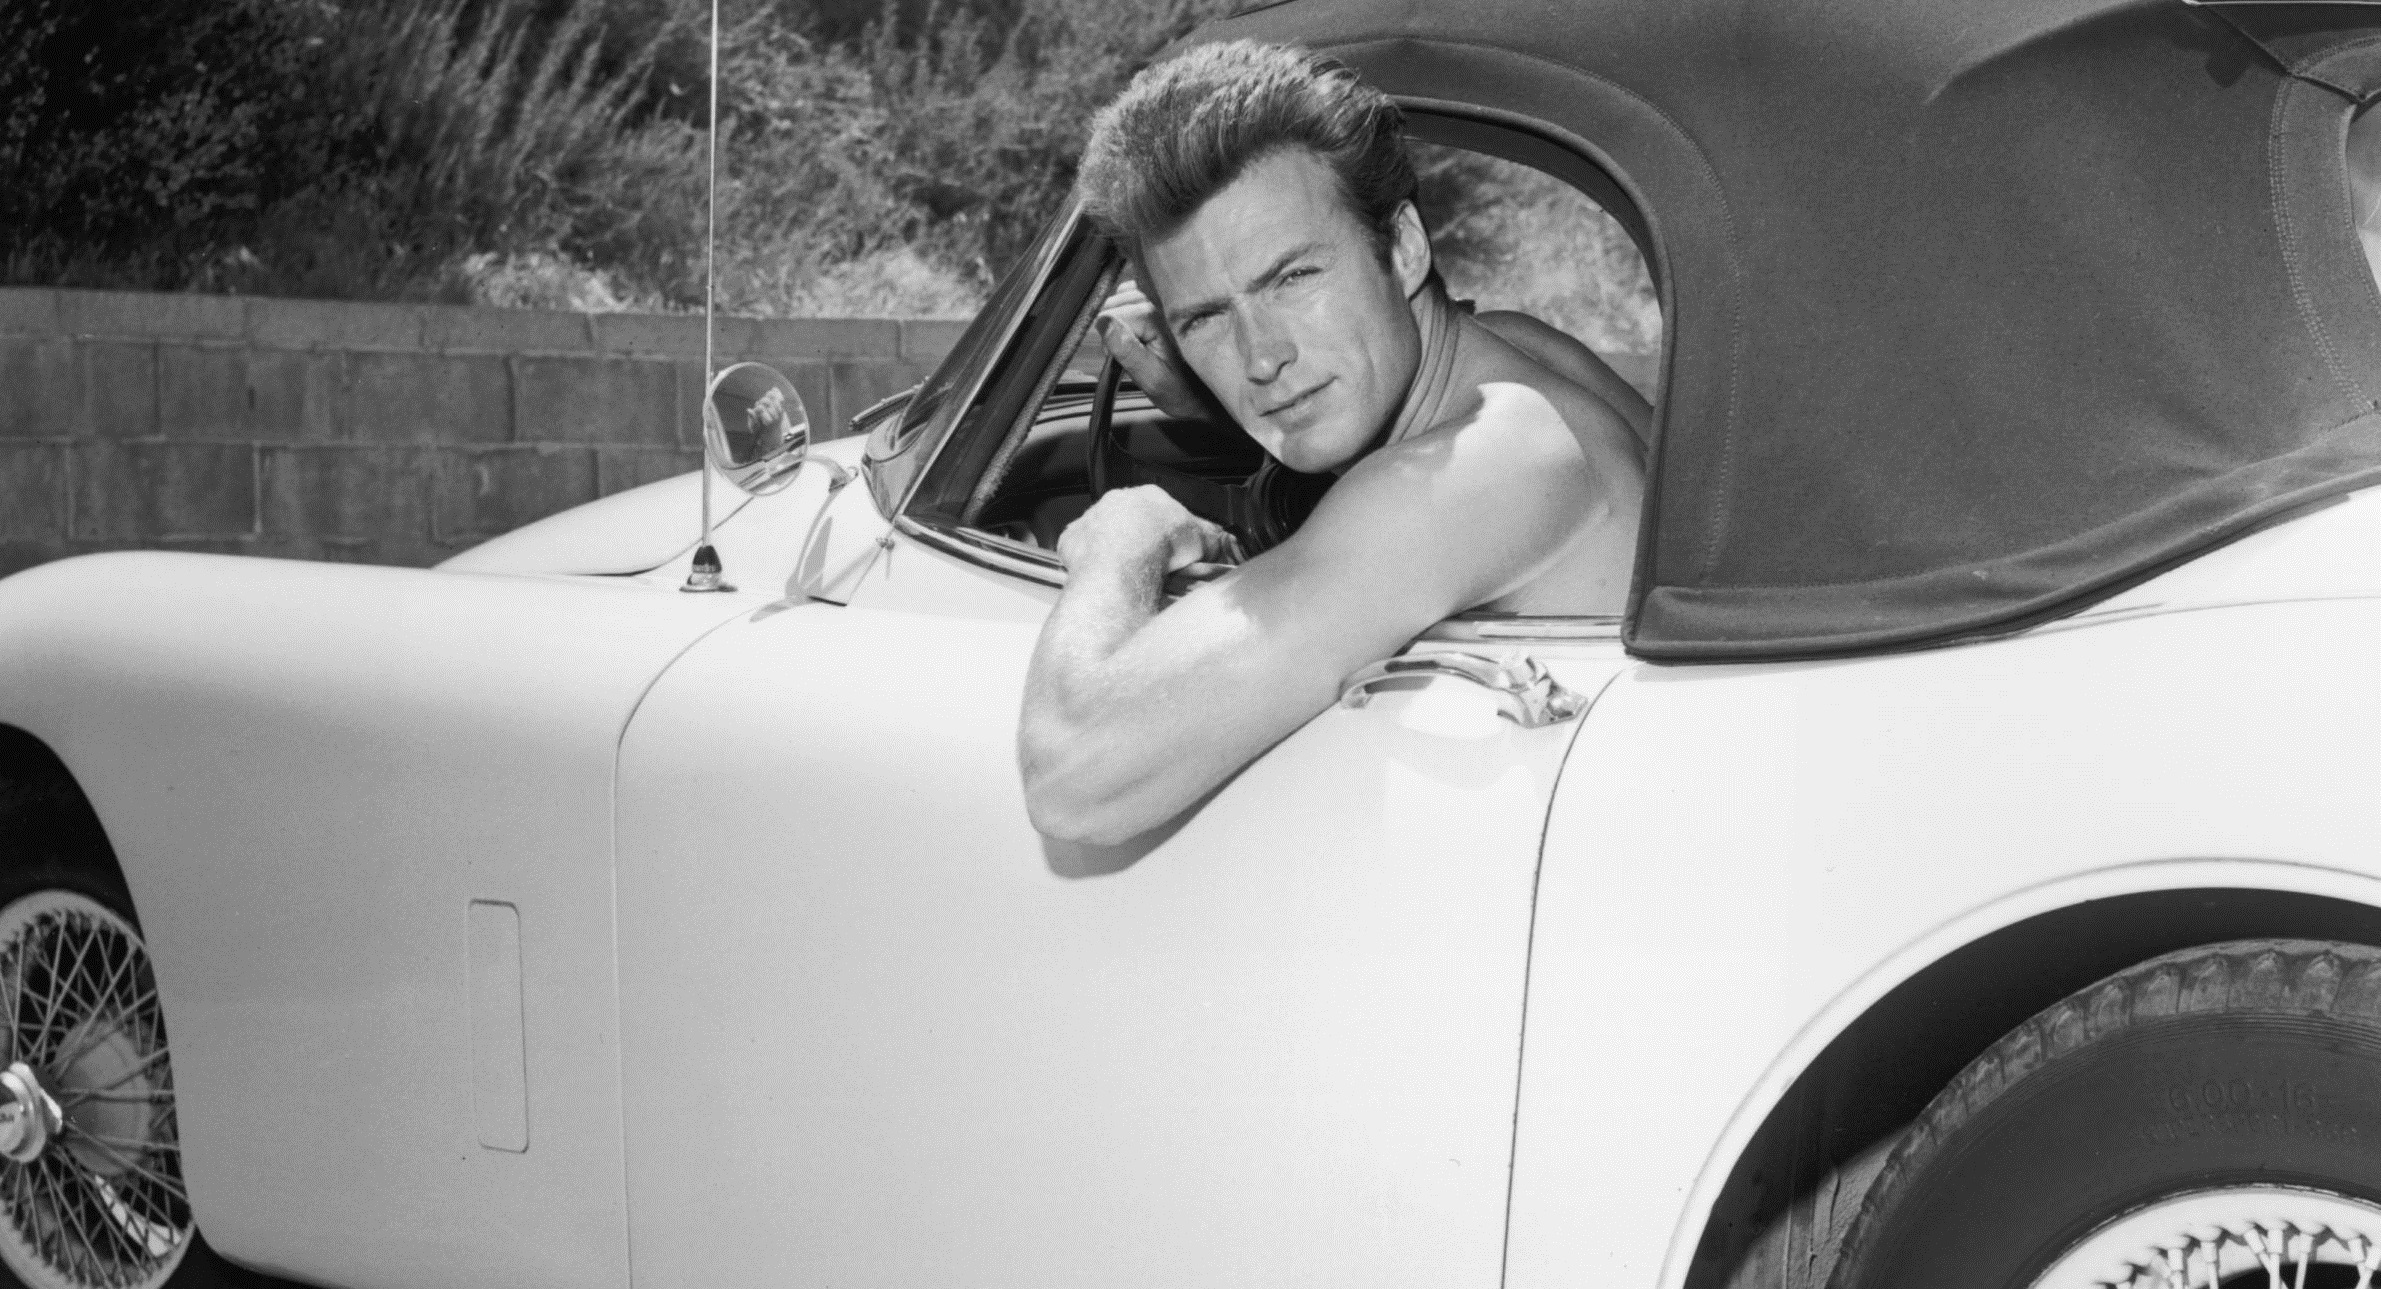 1965: Clint Eastwood in his Jaguar XK150 roadster